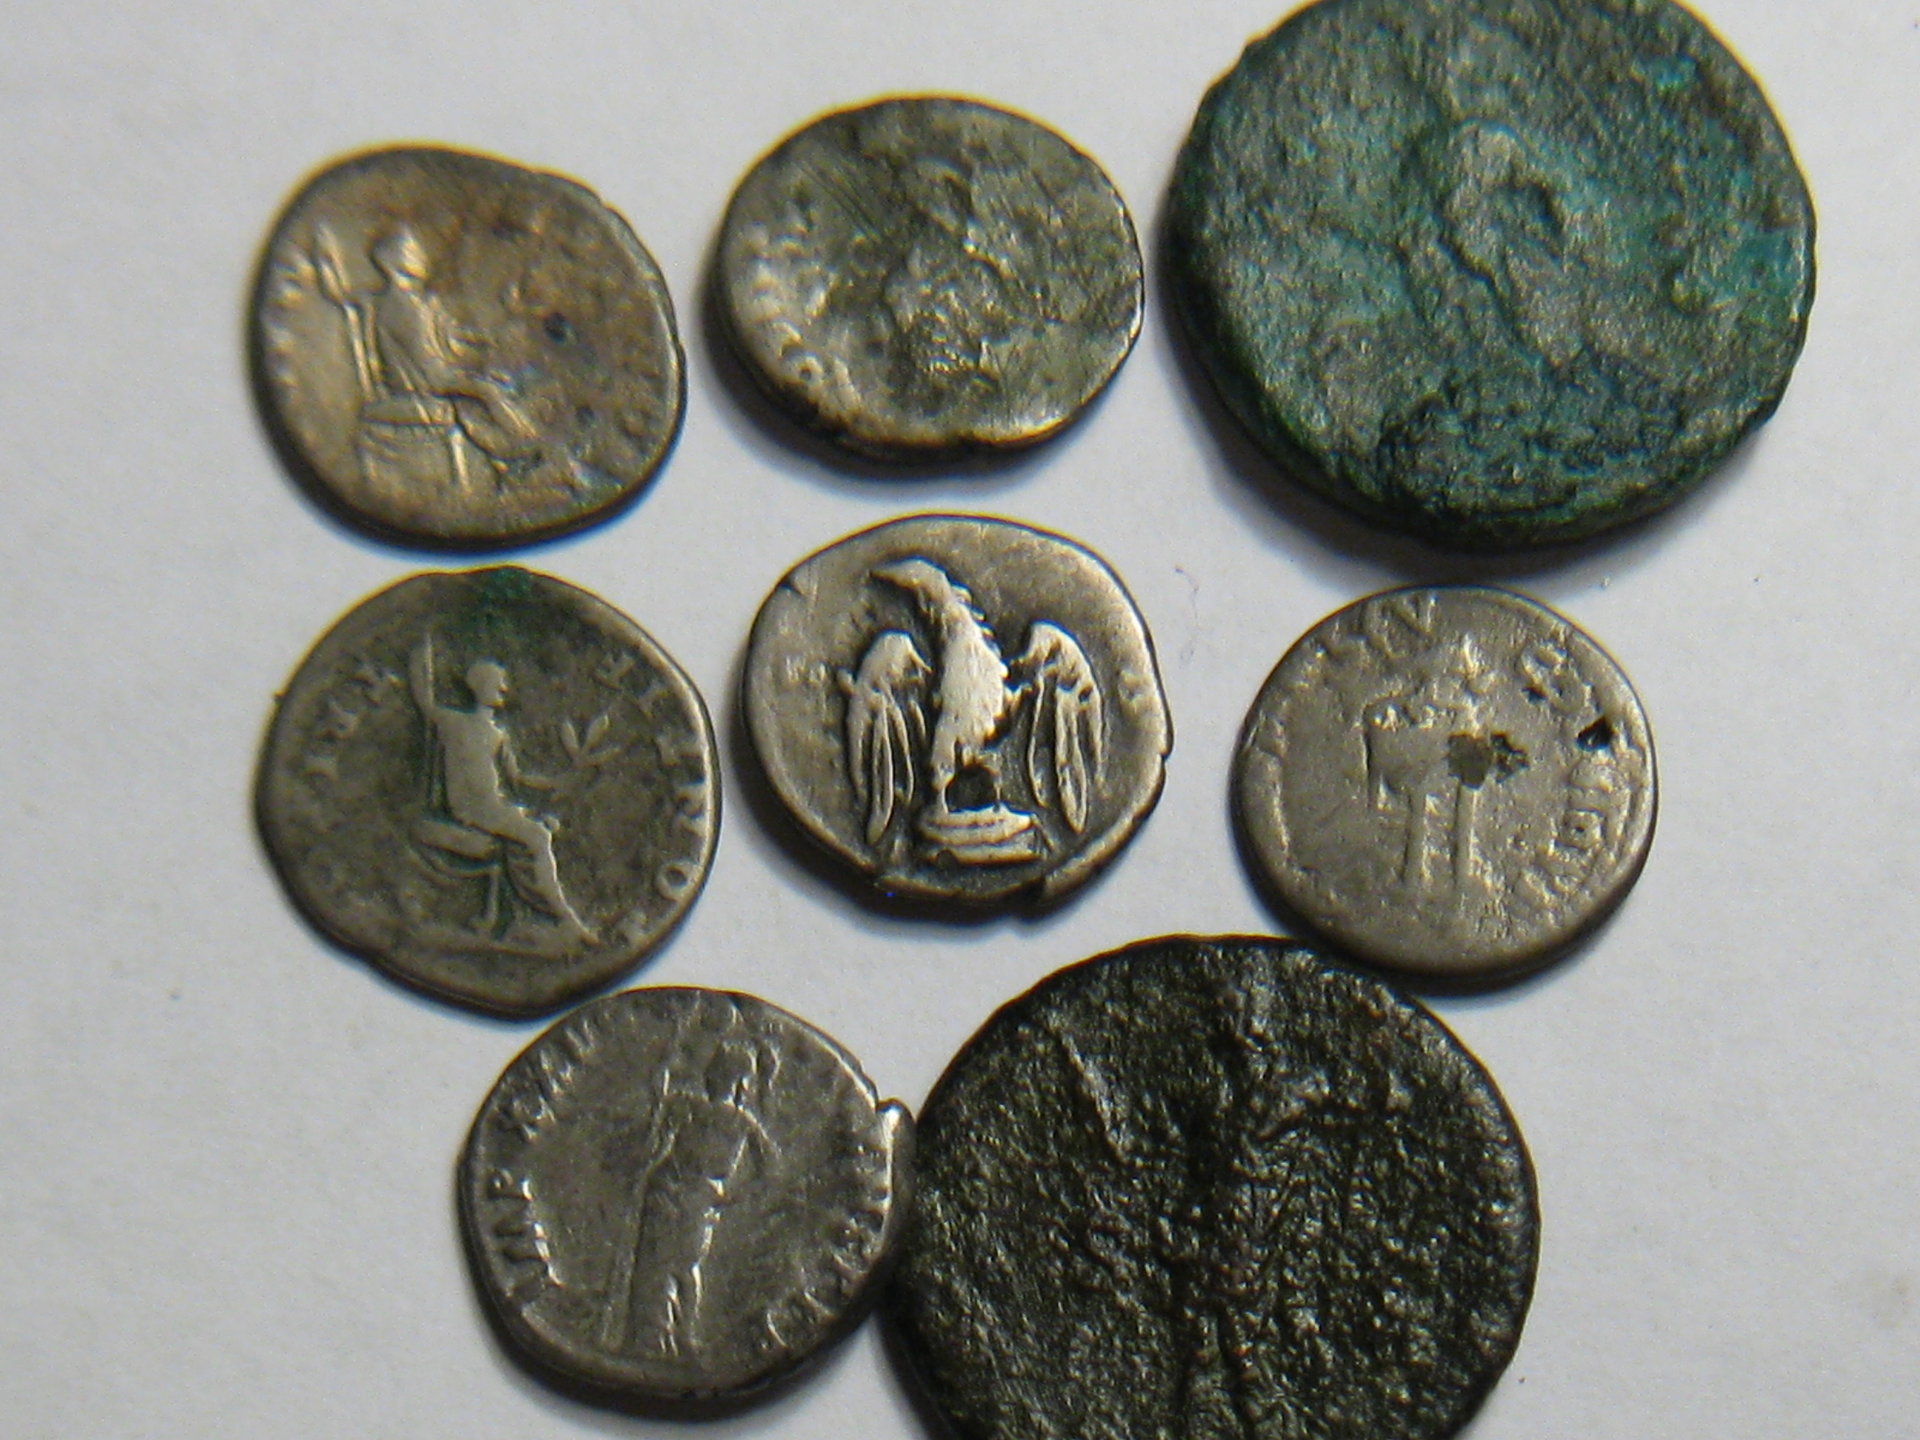 vespasian and sons nero coins 004.JPG